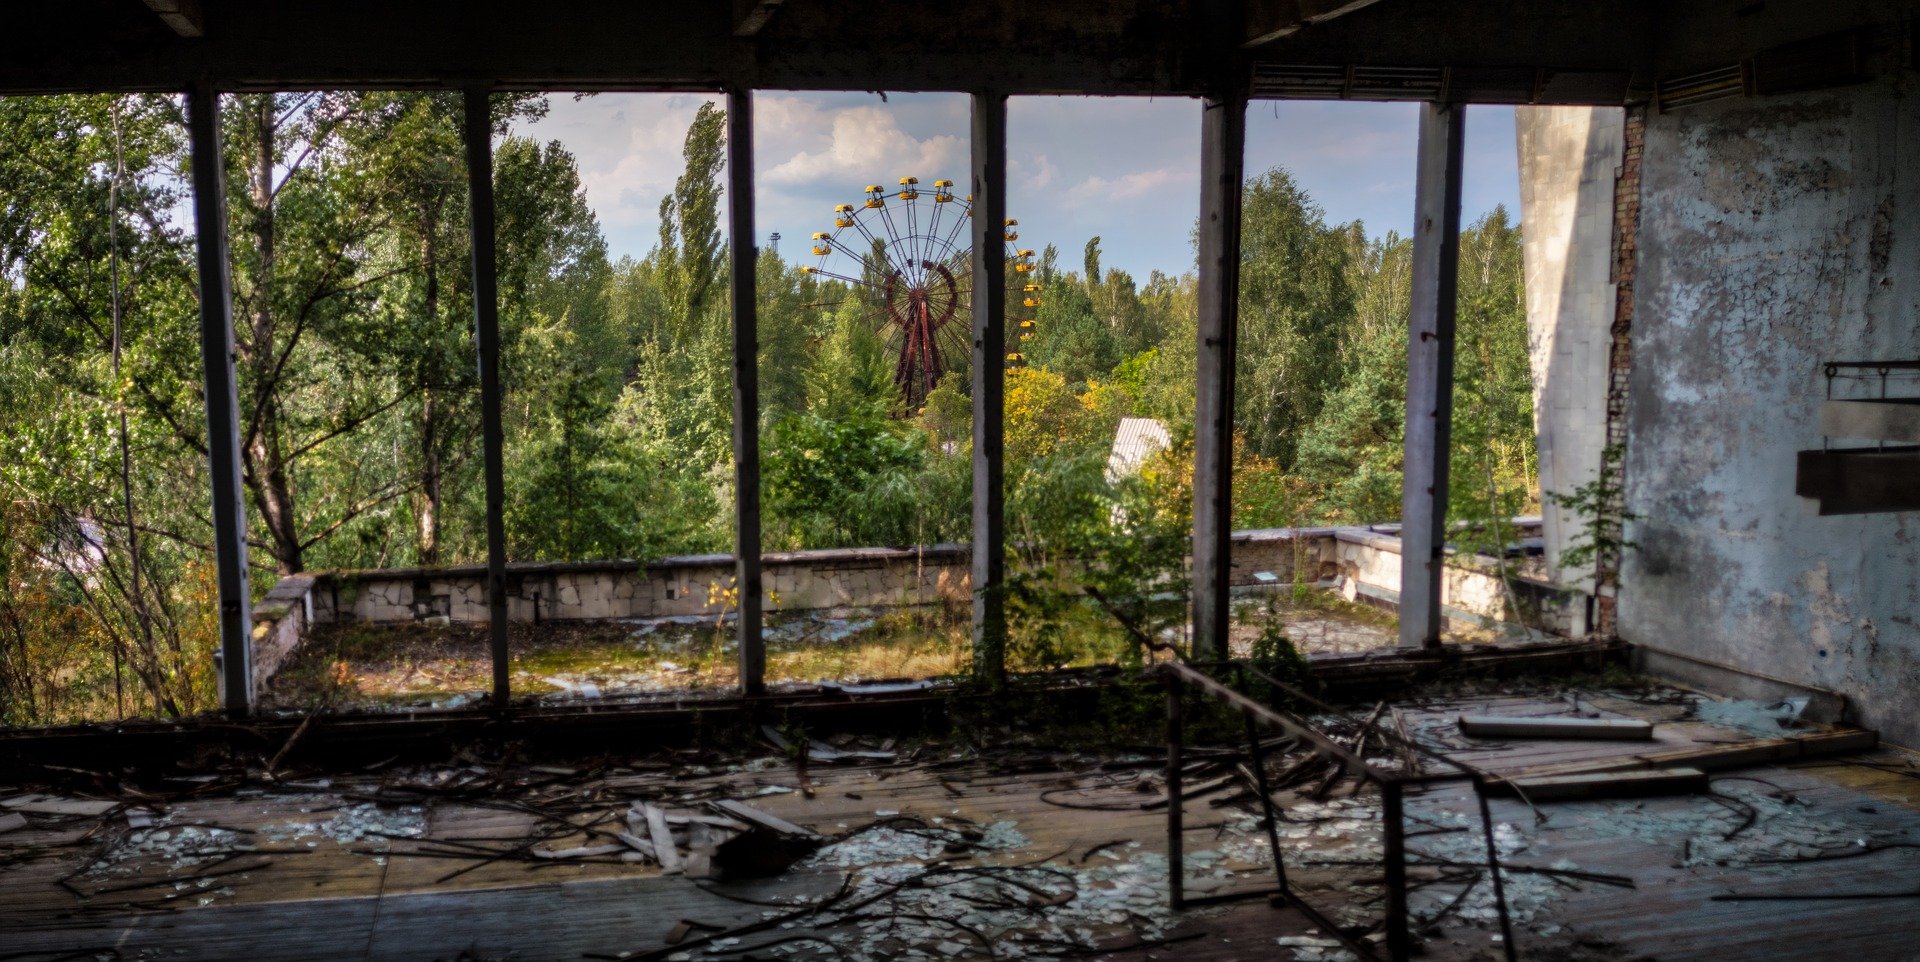 Chernolbyl